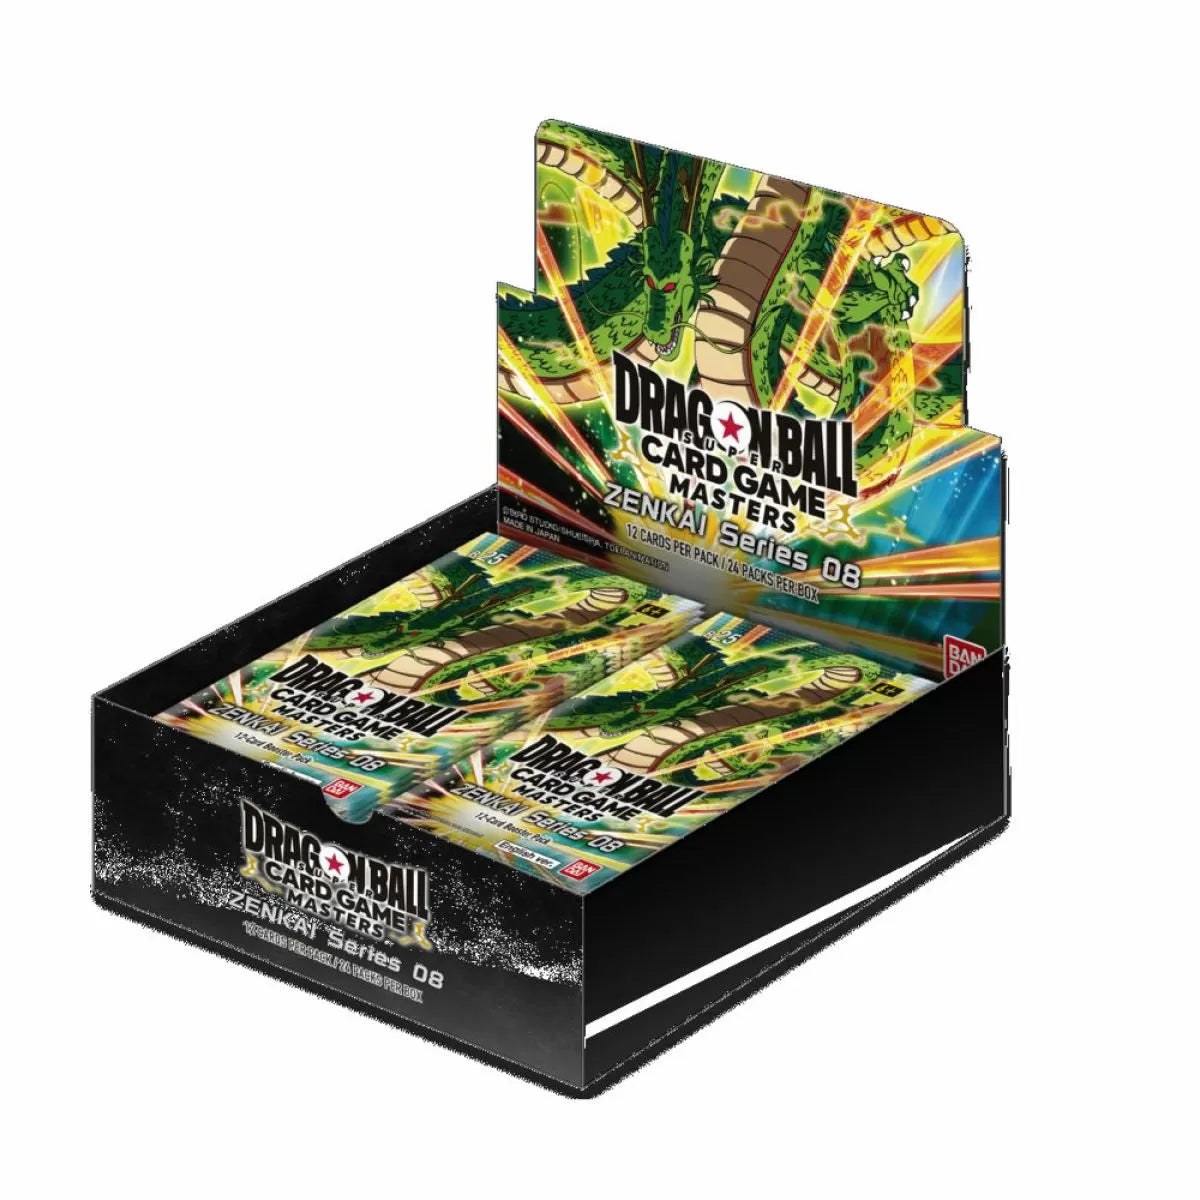 Dragon Ball Super Card Game Masters Zenkai Series EX Set 08 Booster Box [B25] (Preorder)